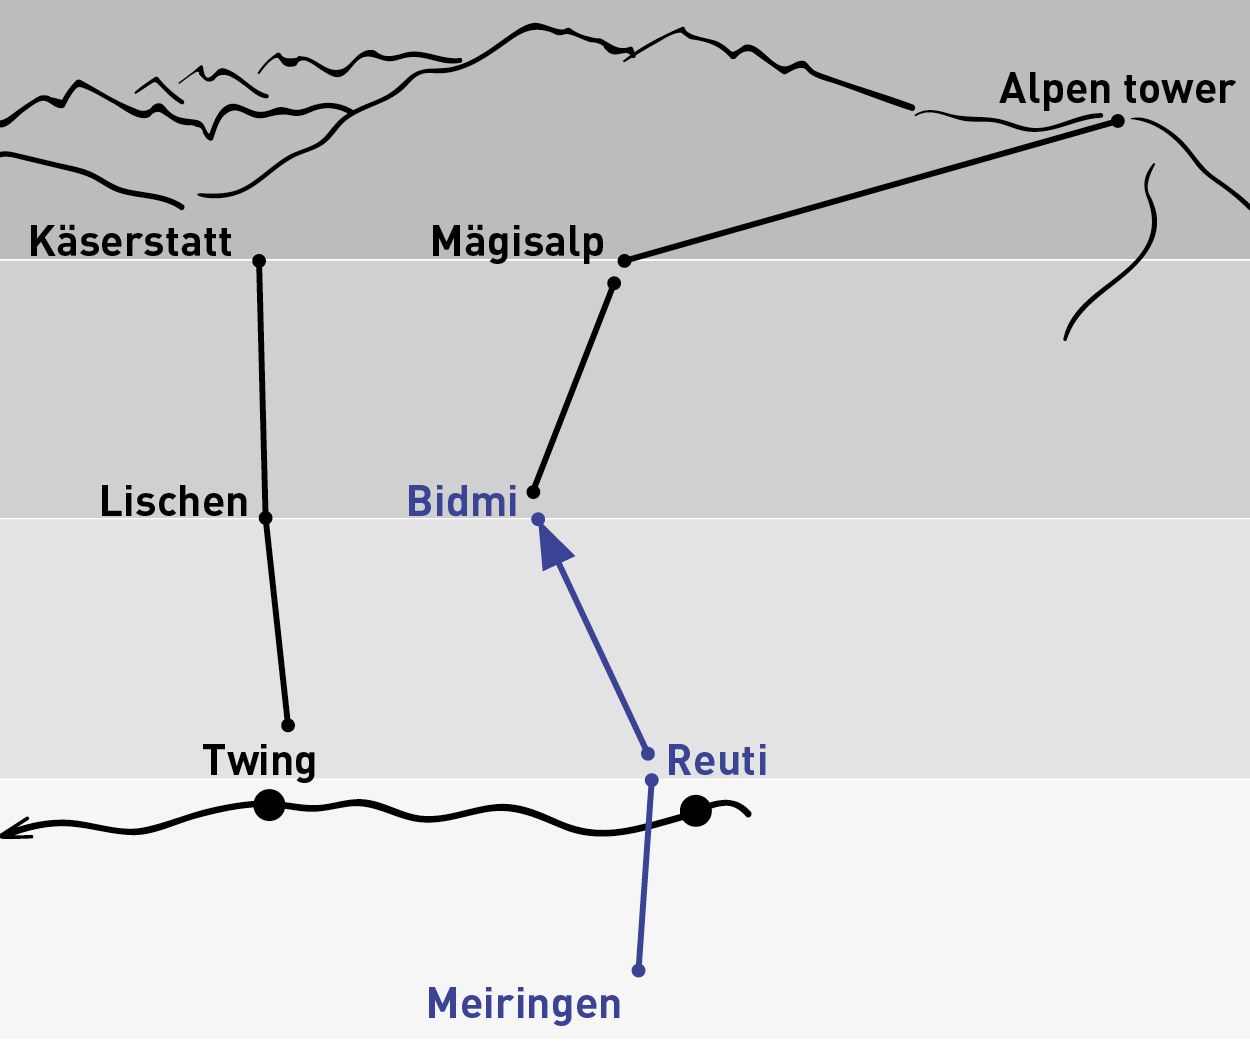 Meiringen – Bidmi | One-way trip